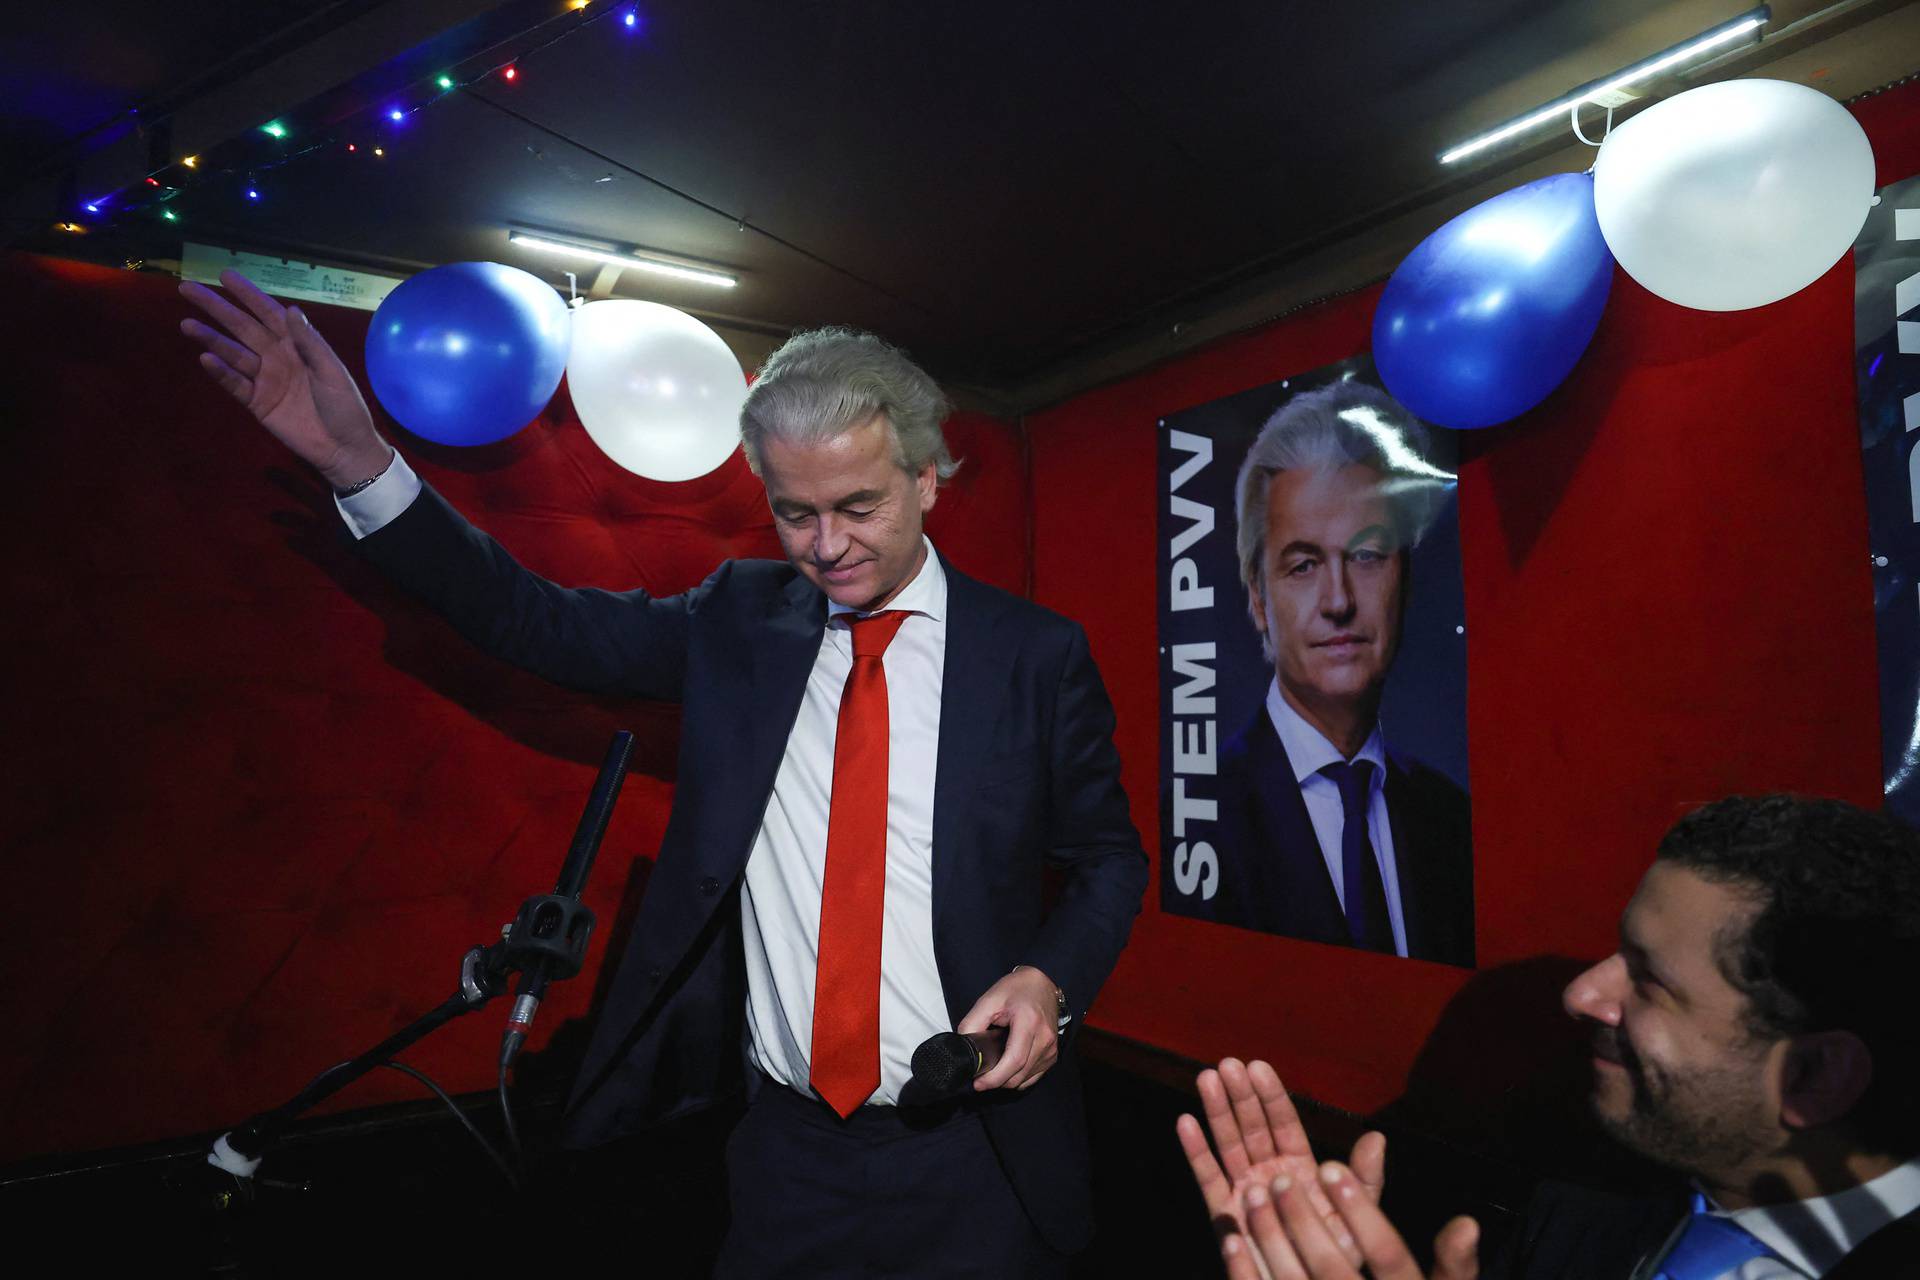 Dutch parliamentary election